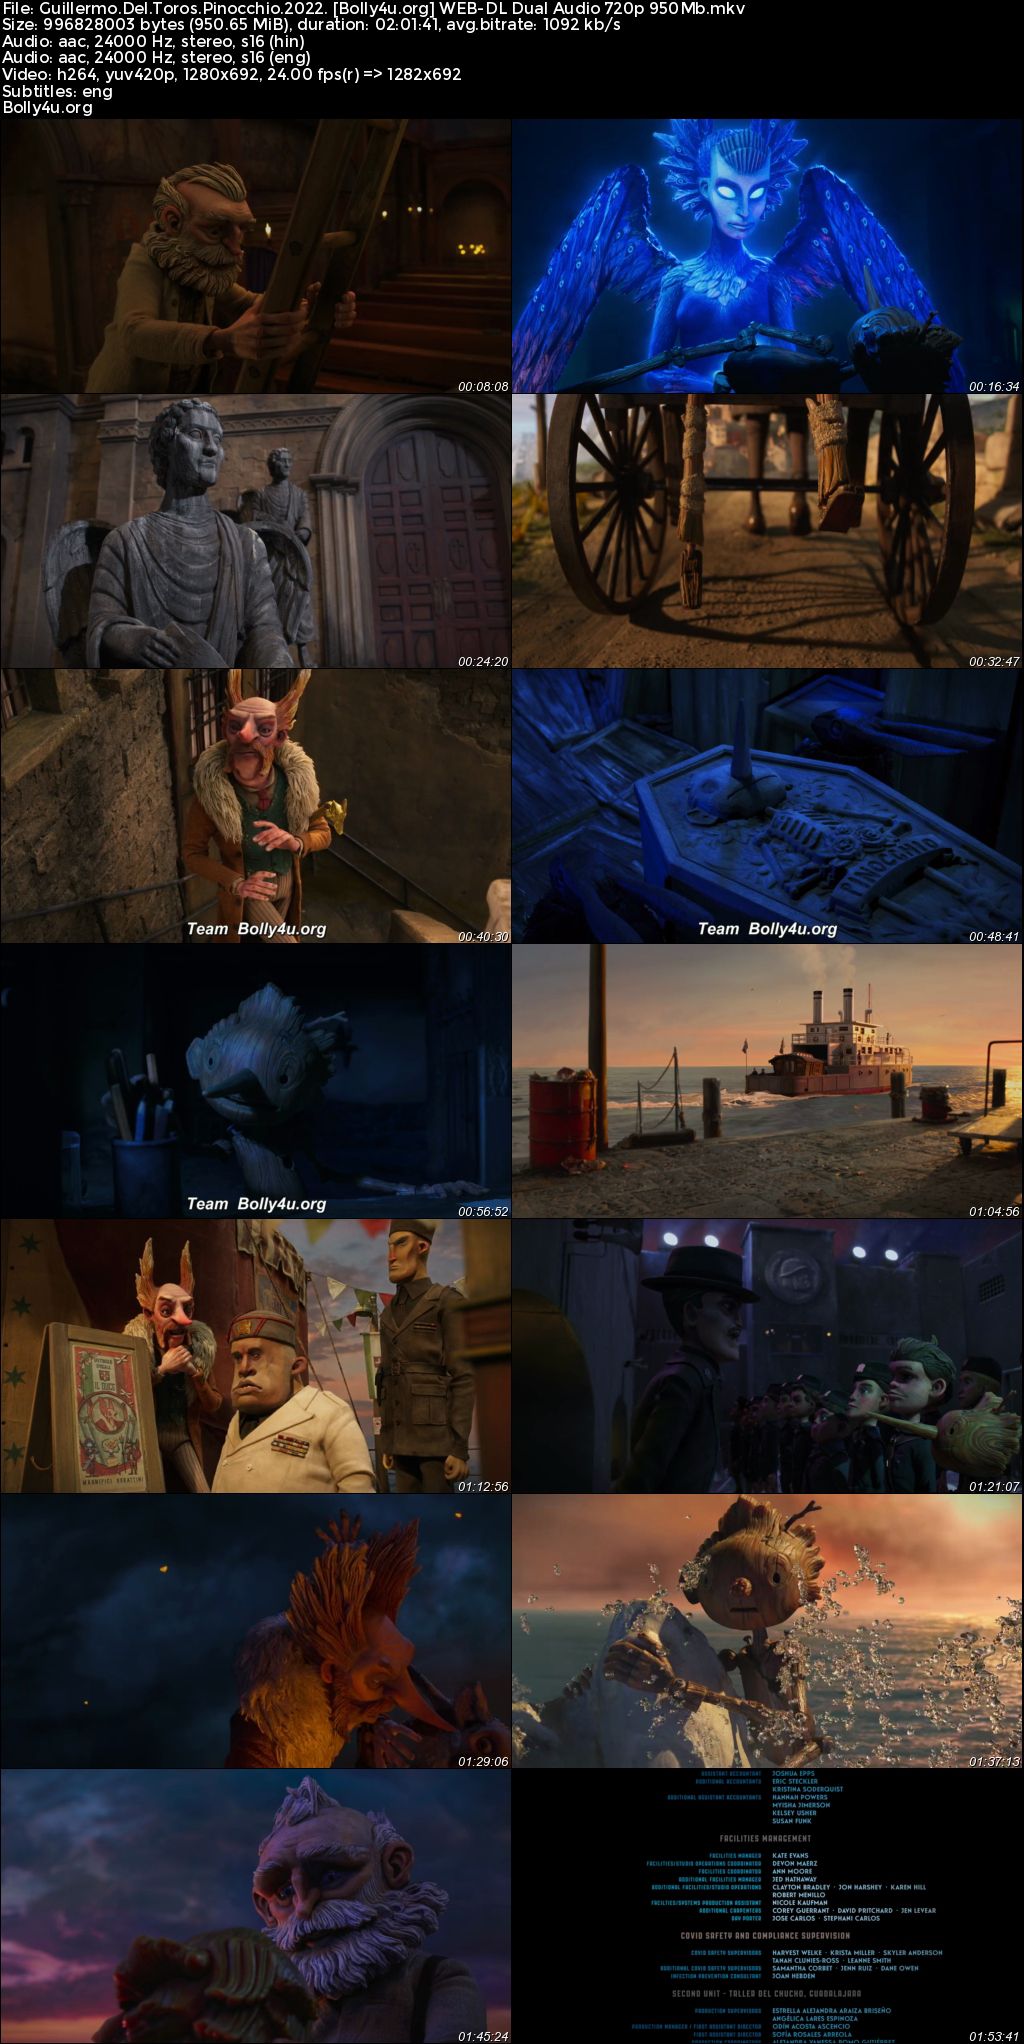 Guillermo Del Toros Pinocchio 2022 WEB-DL Hindi Dual Audio ORG Full Movie Download 1080p 720p 480p